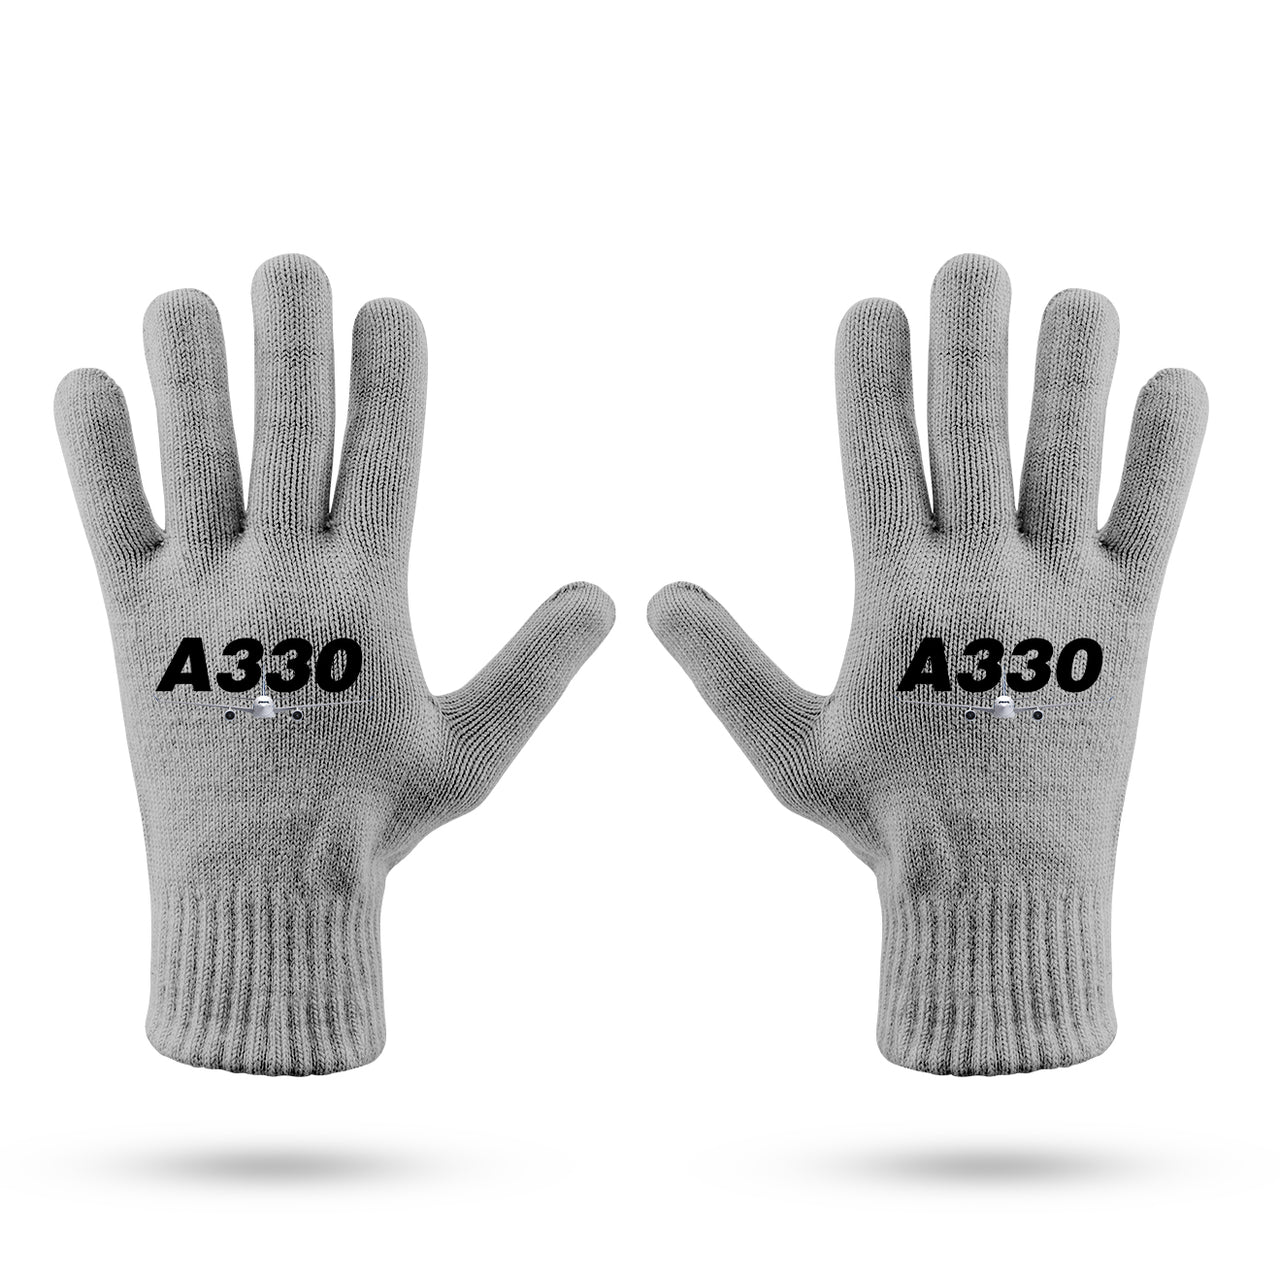 Super Airbus A330 Designed Gloves